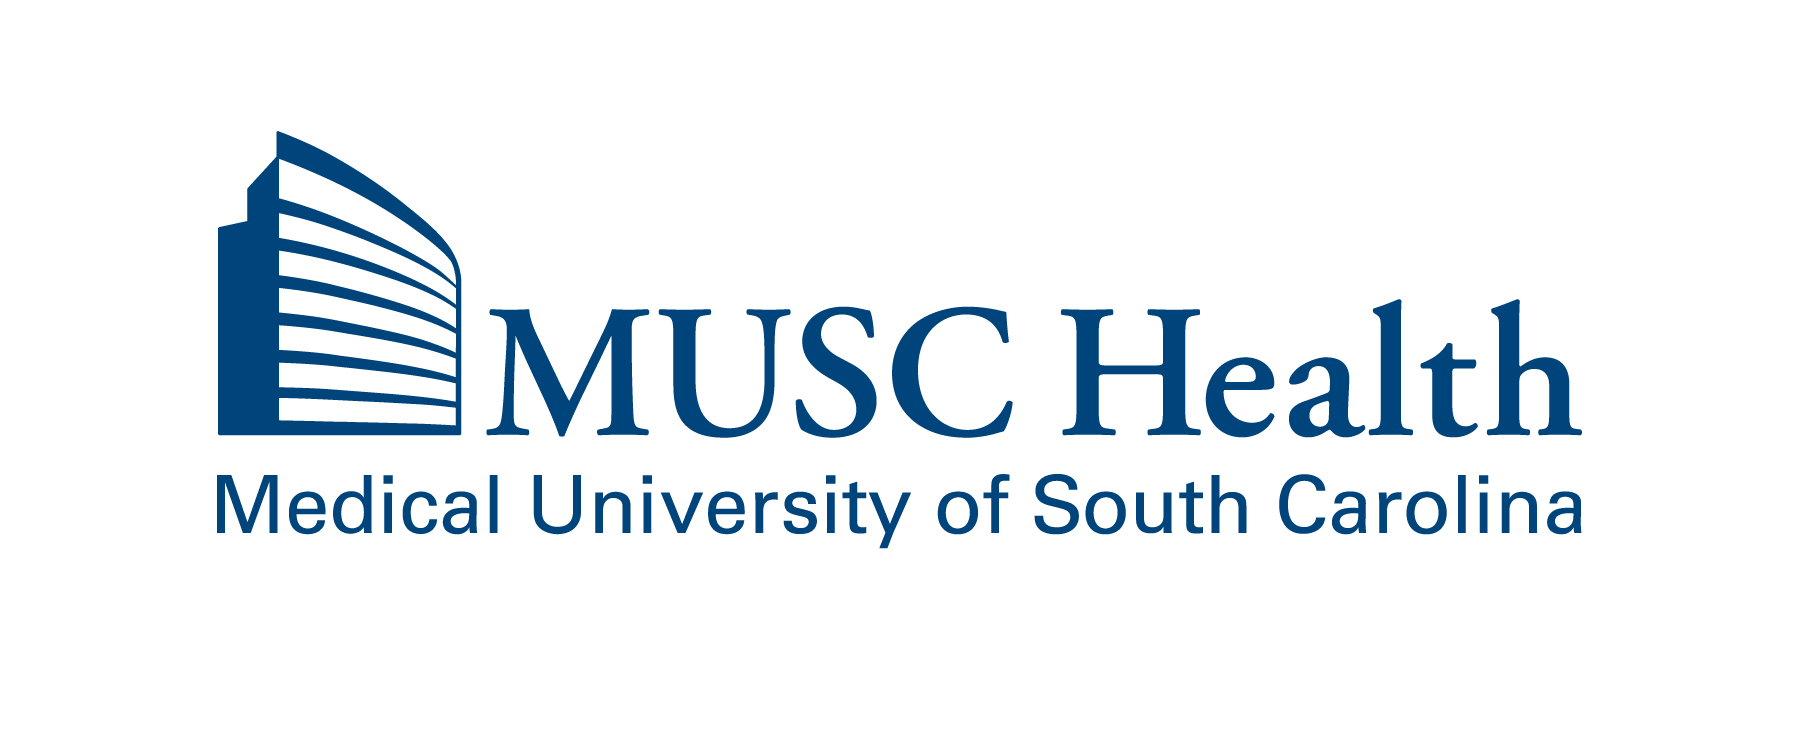 Medical University of South Carolina Health logo